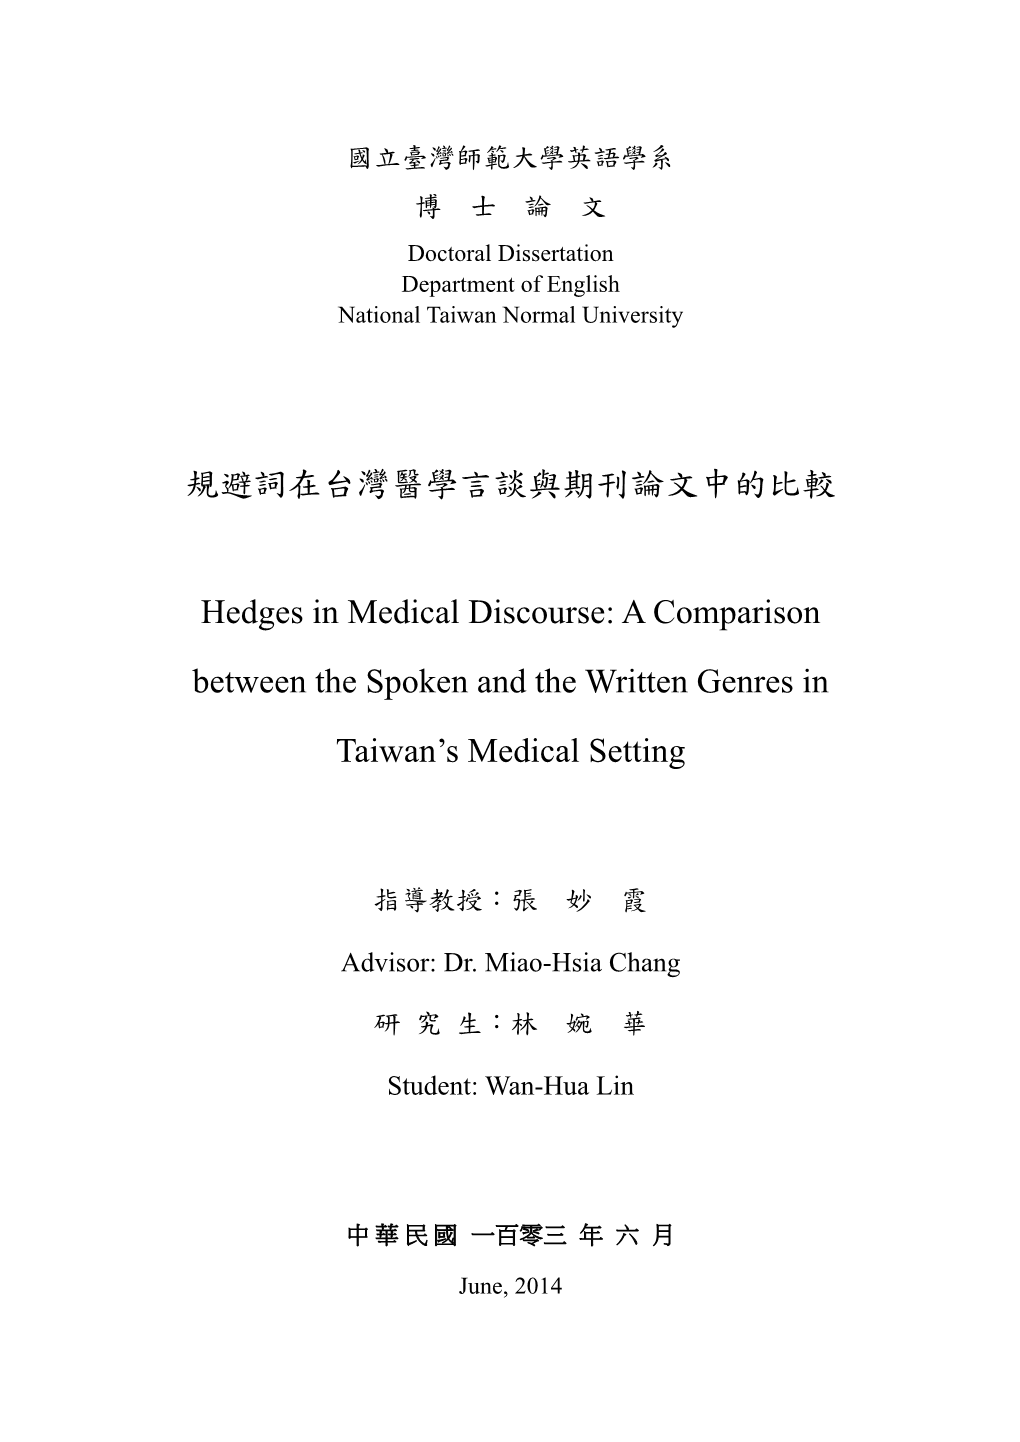 規避詞在台灣醫學言談與期刊論文中的比較 Hedges in Medical Discourse: a Comparison Between the Spoken and the W